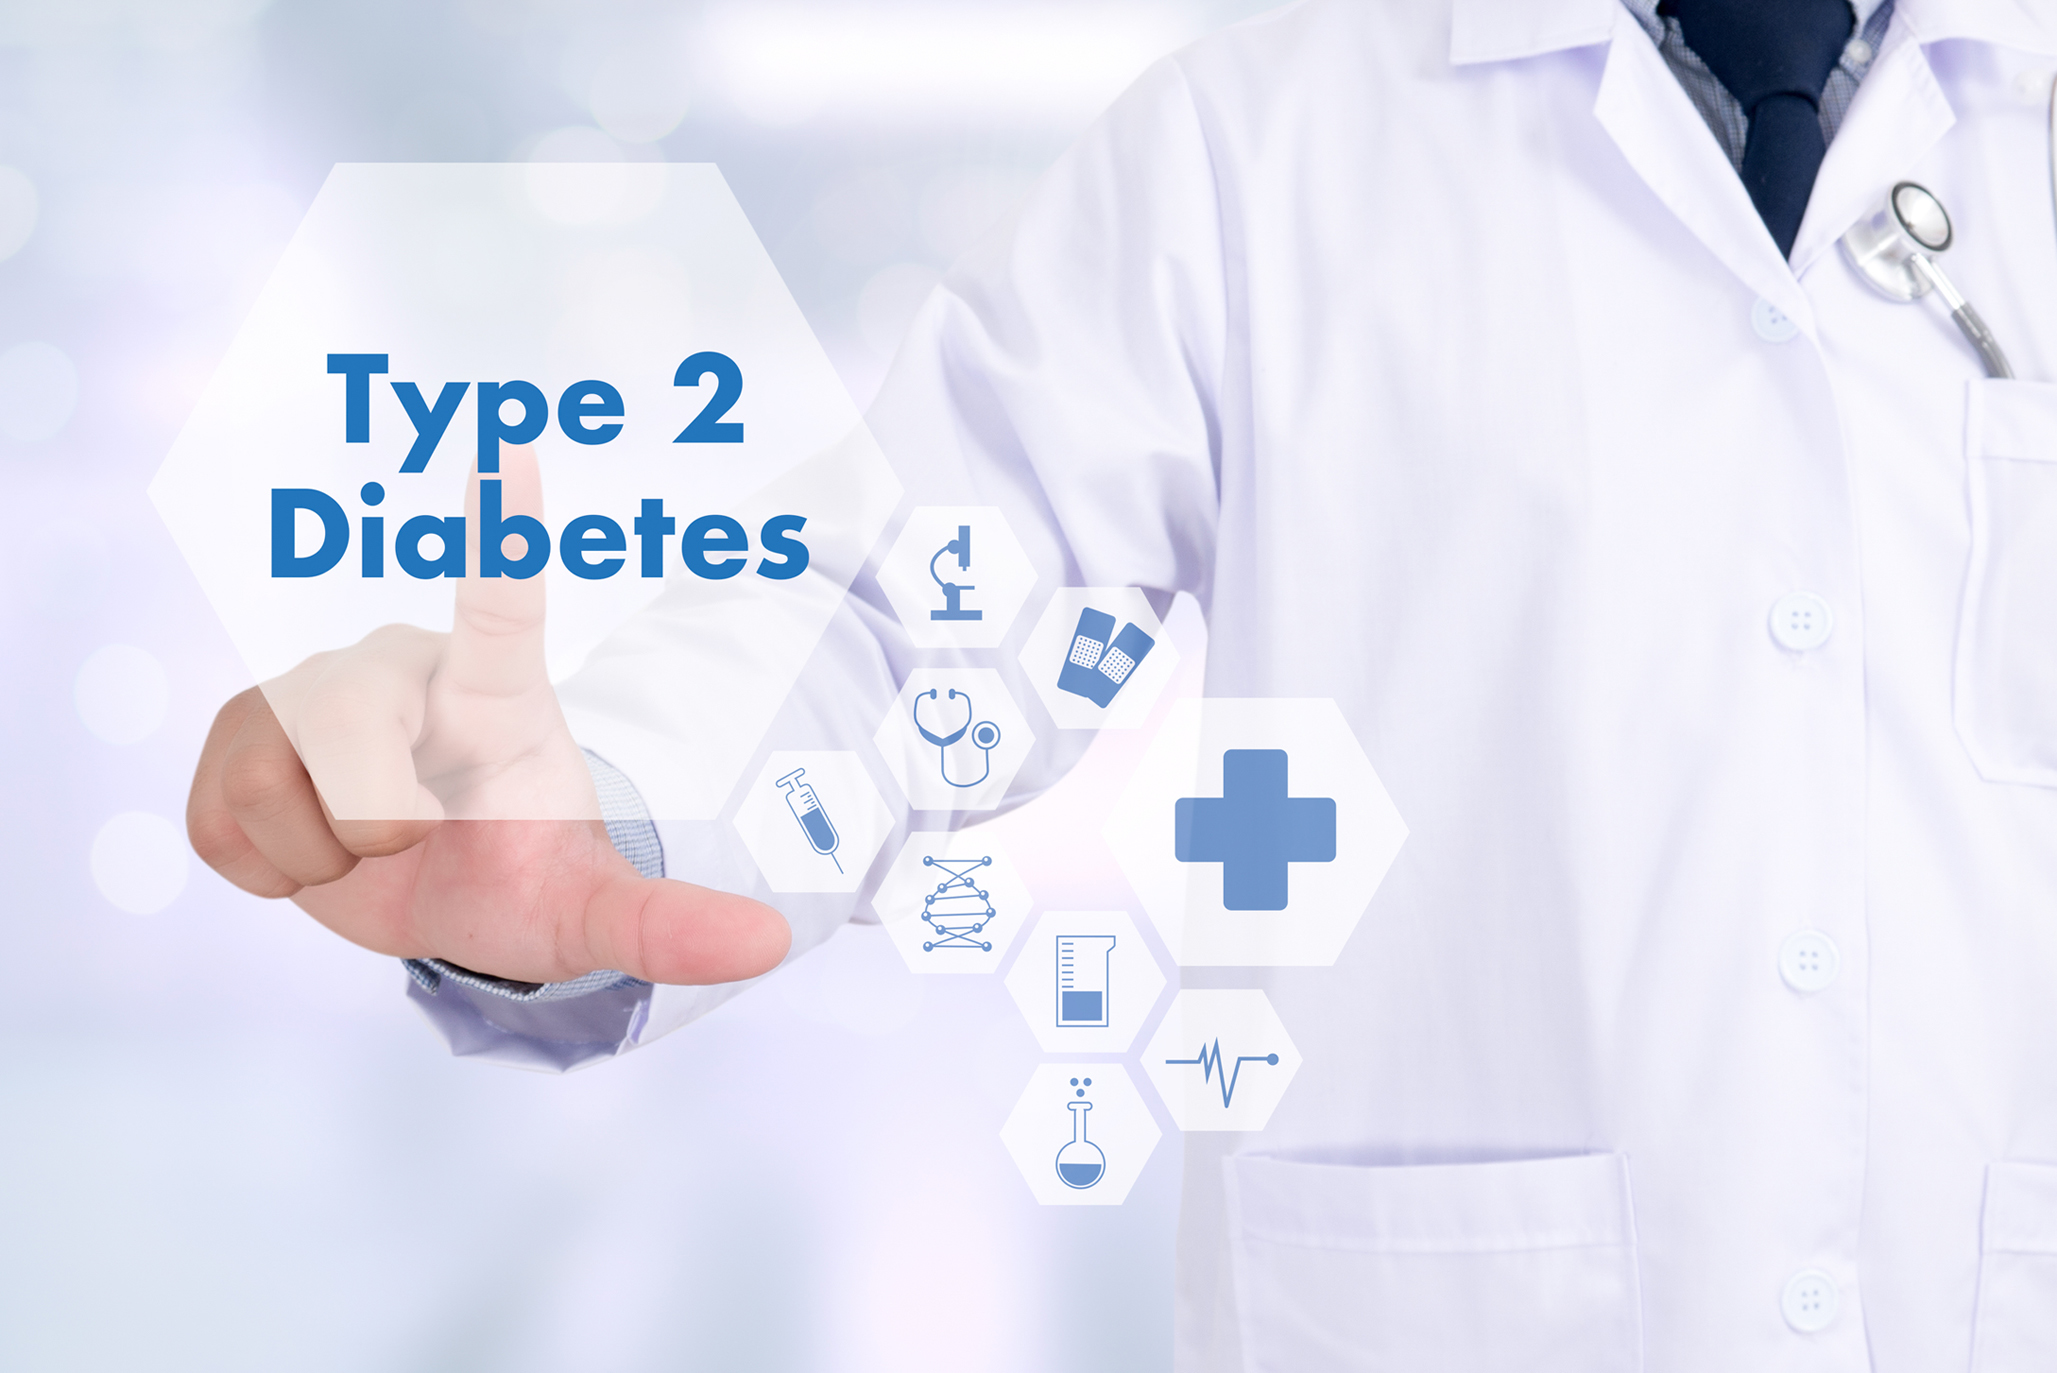 1-Diabetes-Type-2-5cfb7b26-fa8b-4fdb-beb4-8ffd625b3744.jpg